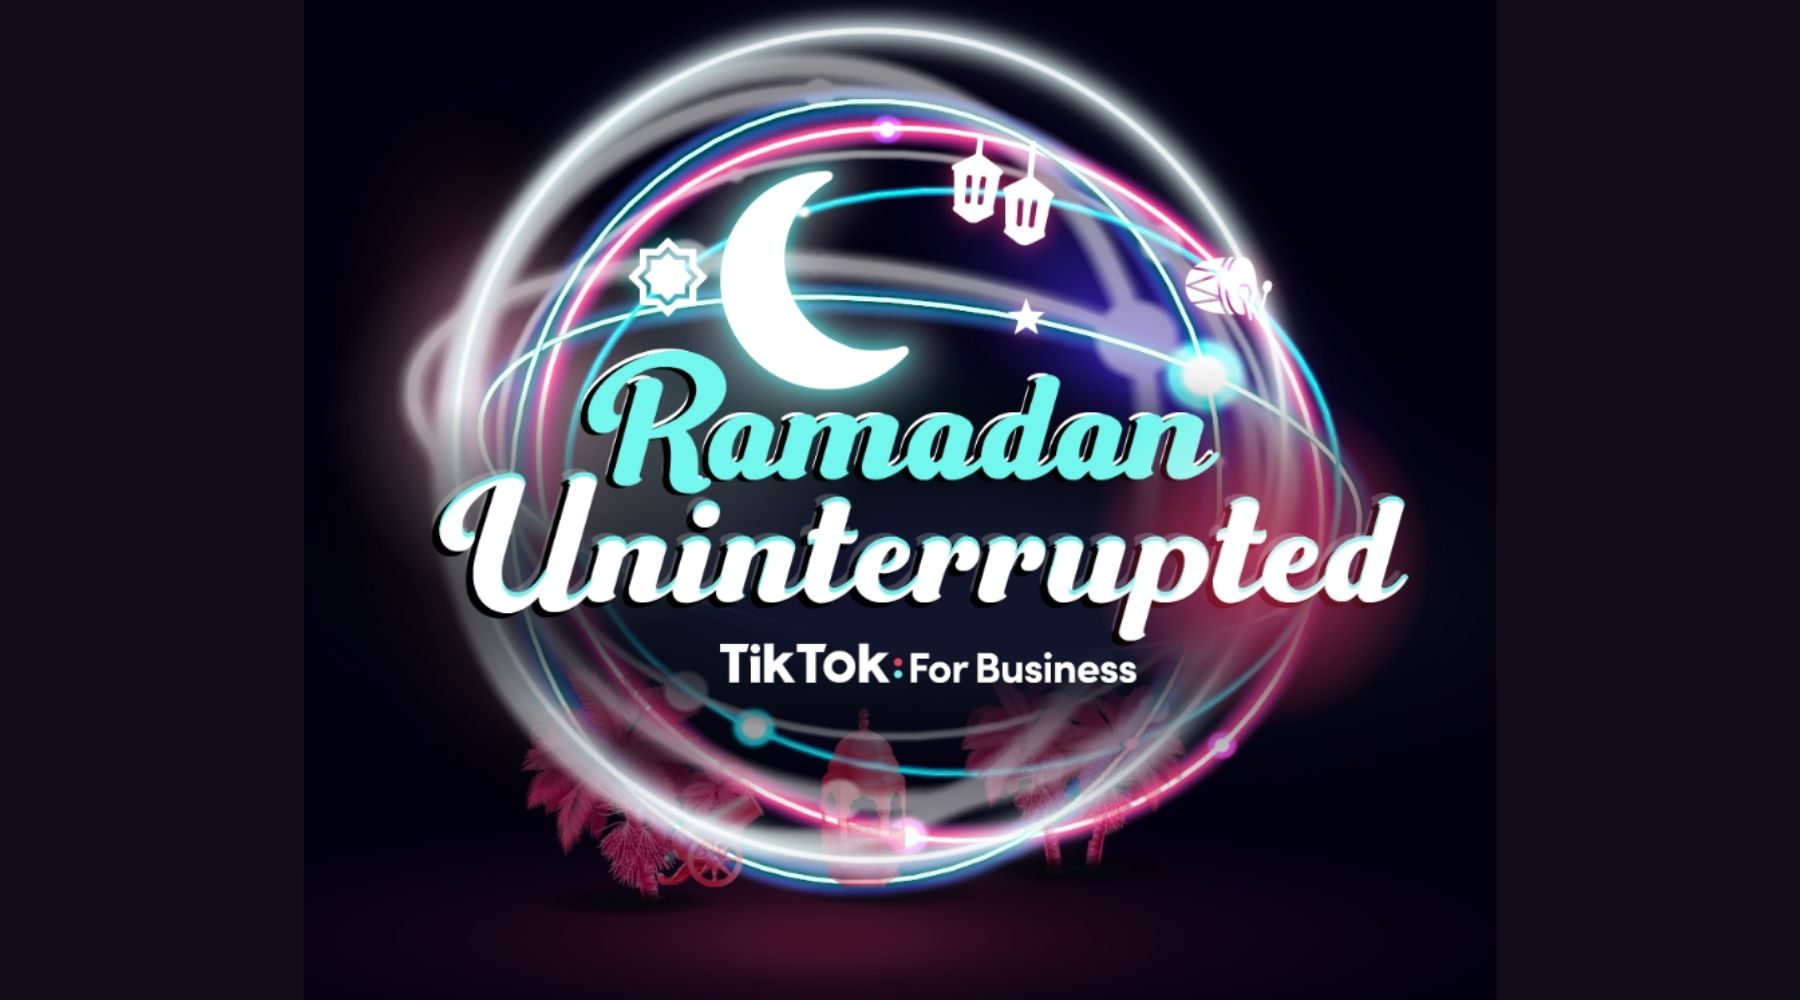 TikTok Drives Brands Towards Delivering an Uninterrupted Ramadan Experience